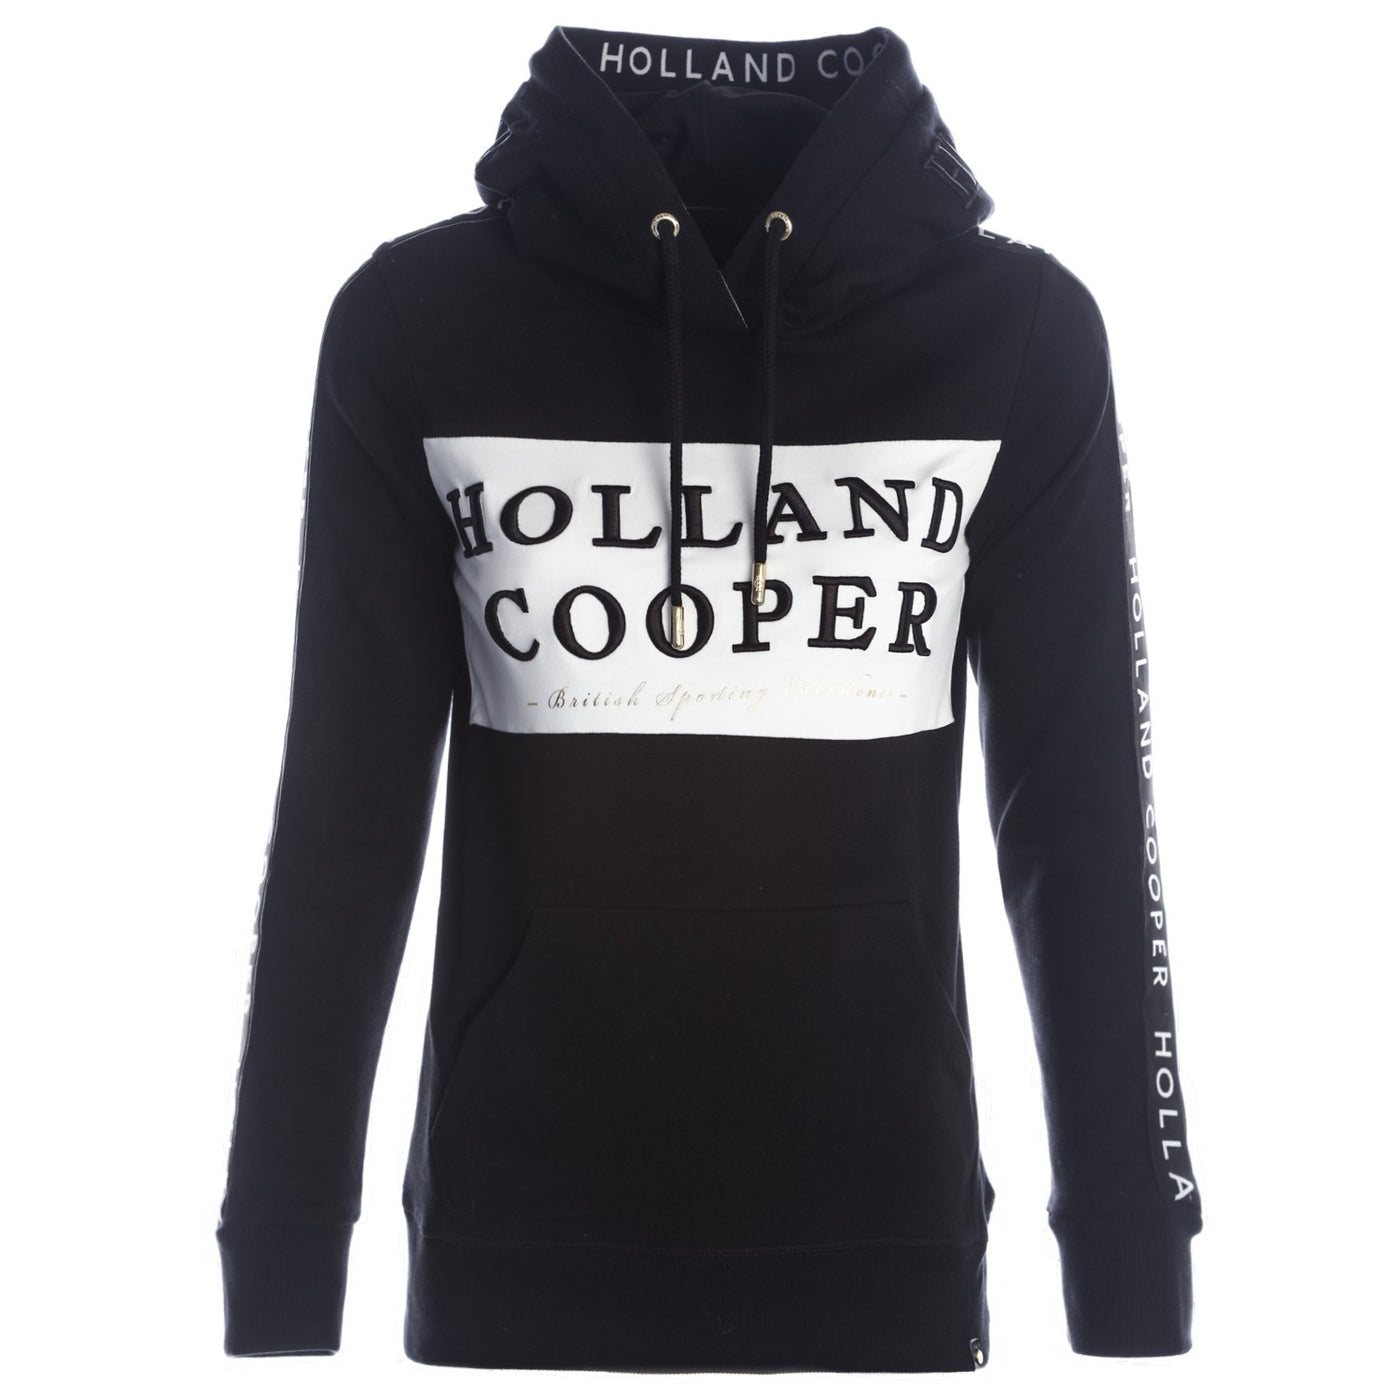 Holland Cooper Deluxe Ladies Hoodie Sweat Top in Black & White